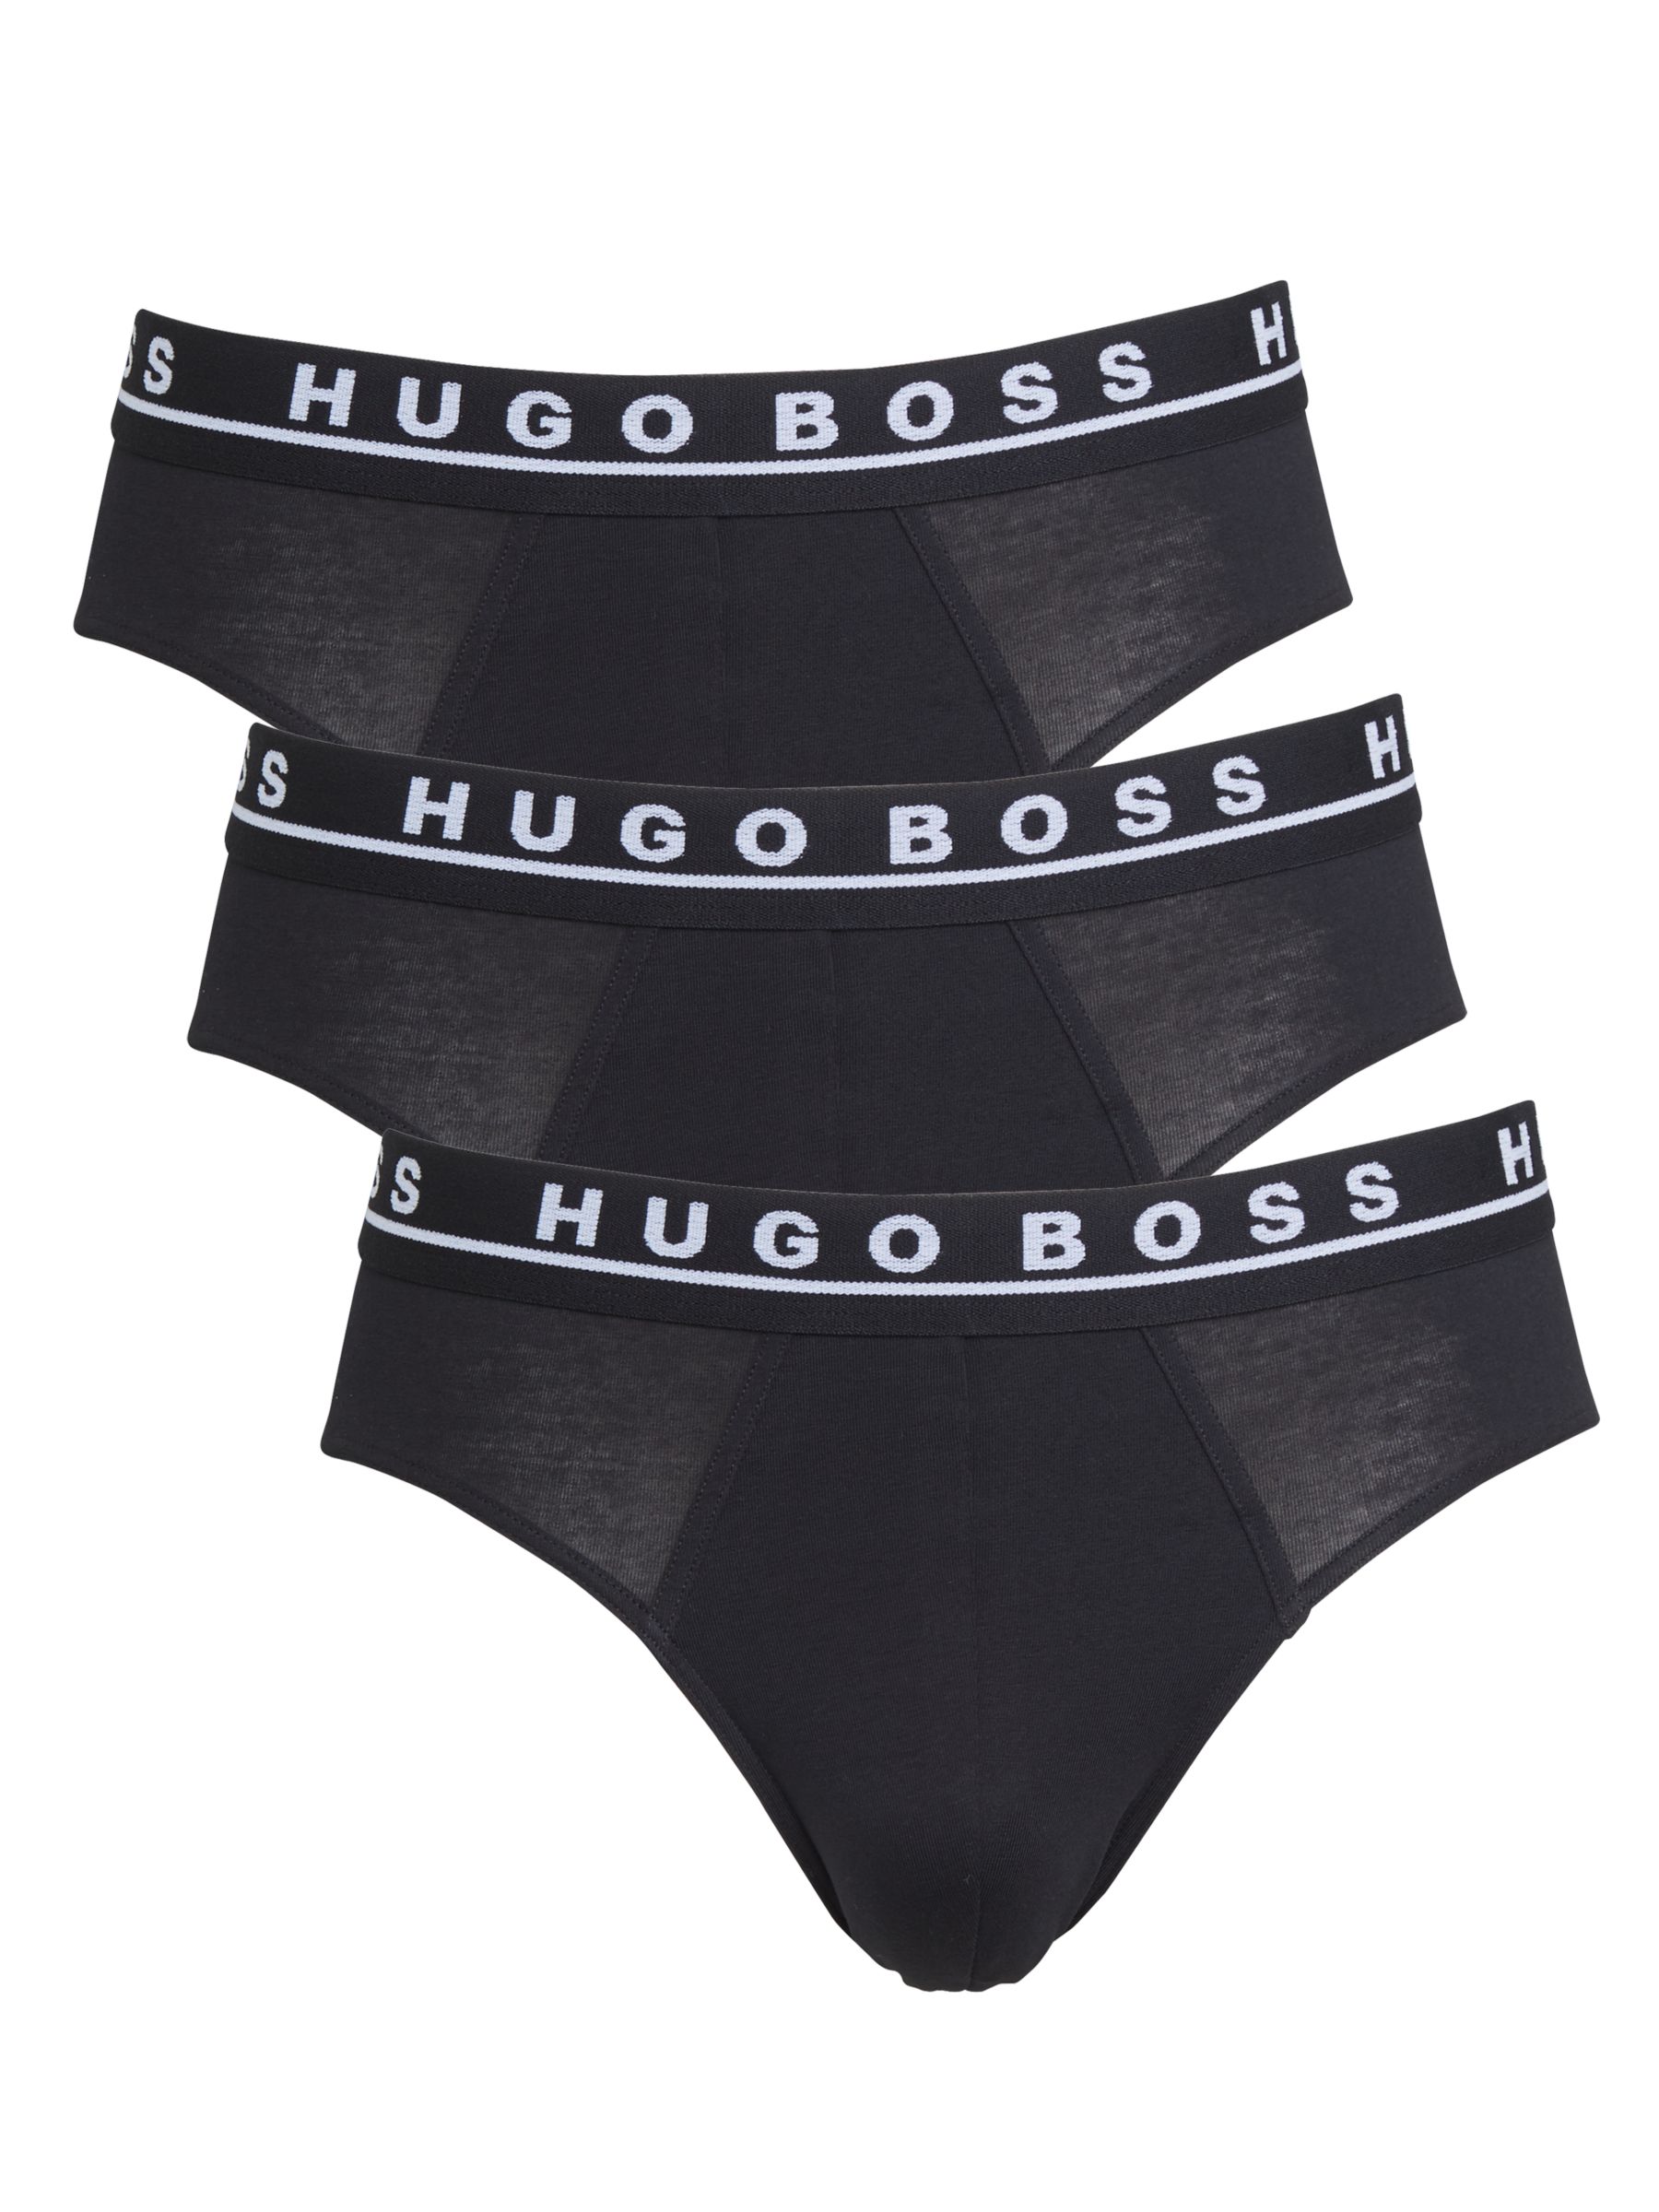 hugo boss panties